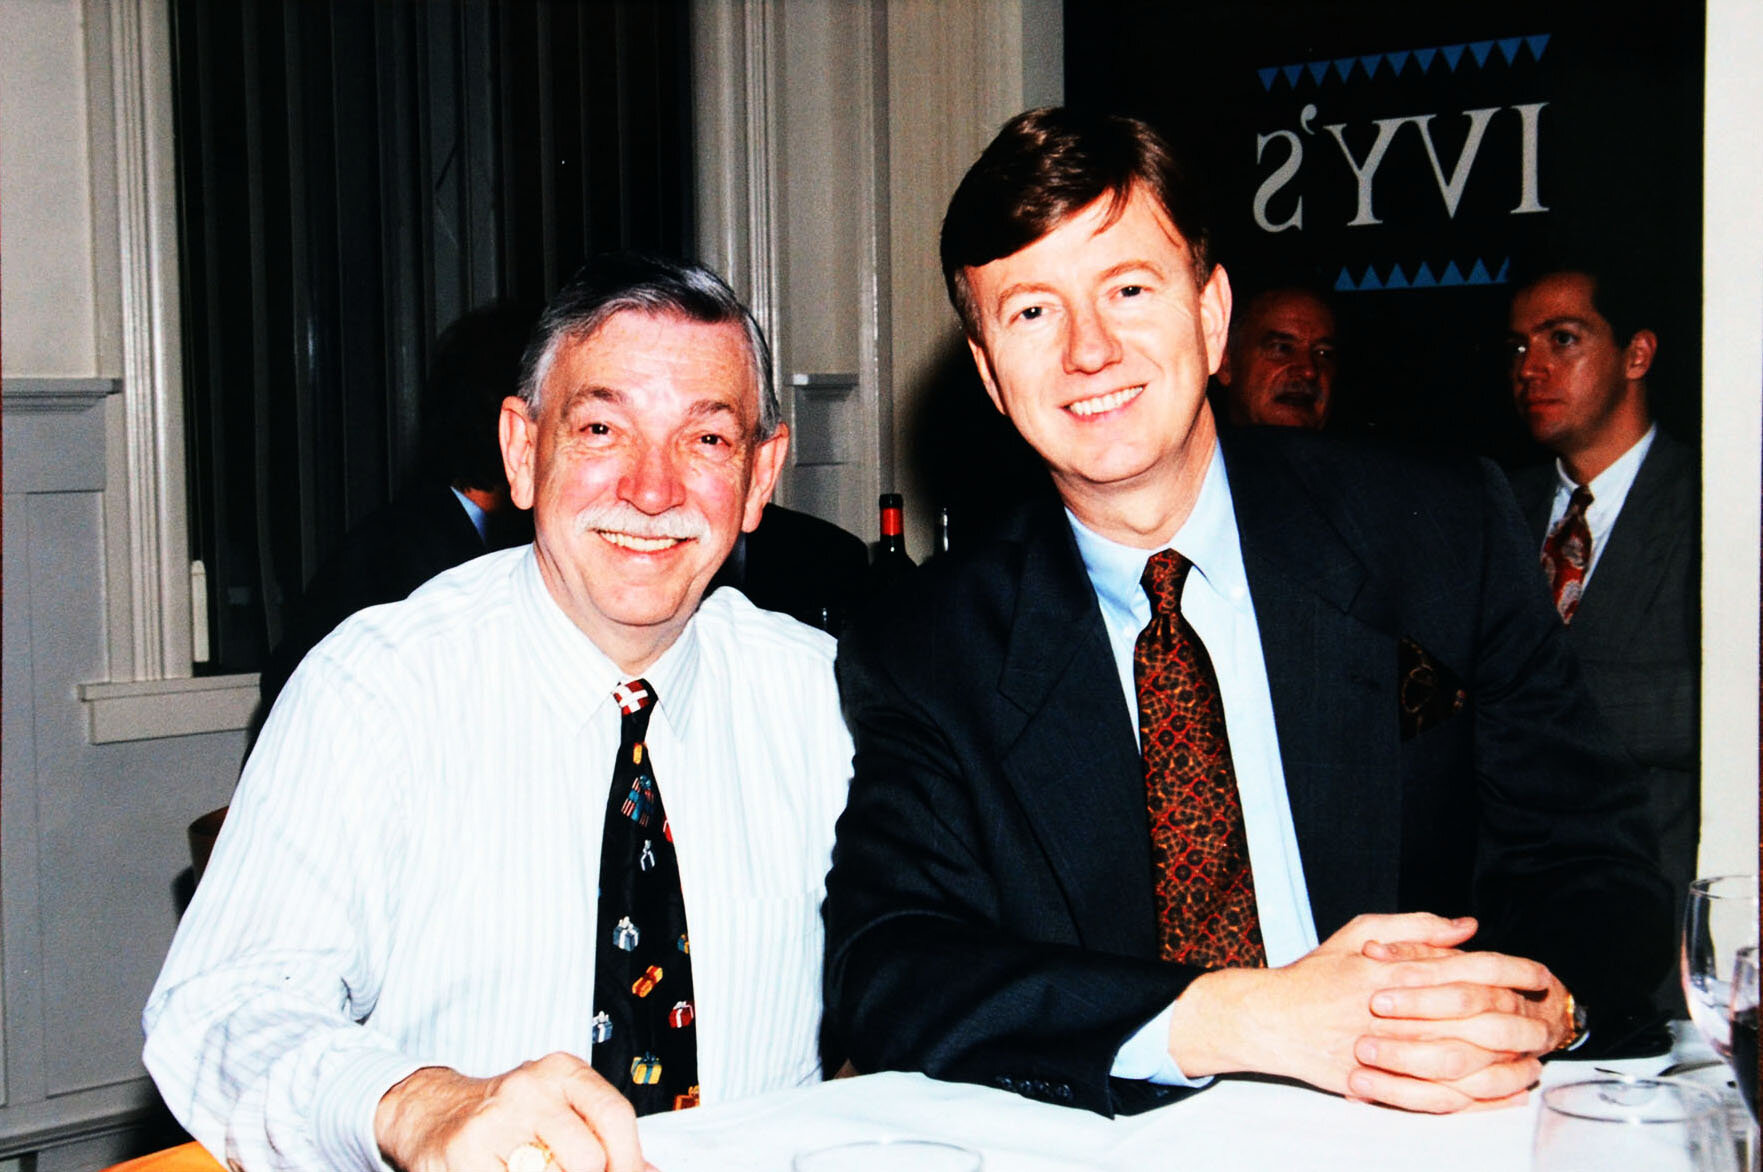  Bob Ross and Tom Horn, 1993; courtesy of Rick Gerharter. 